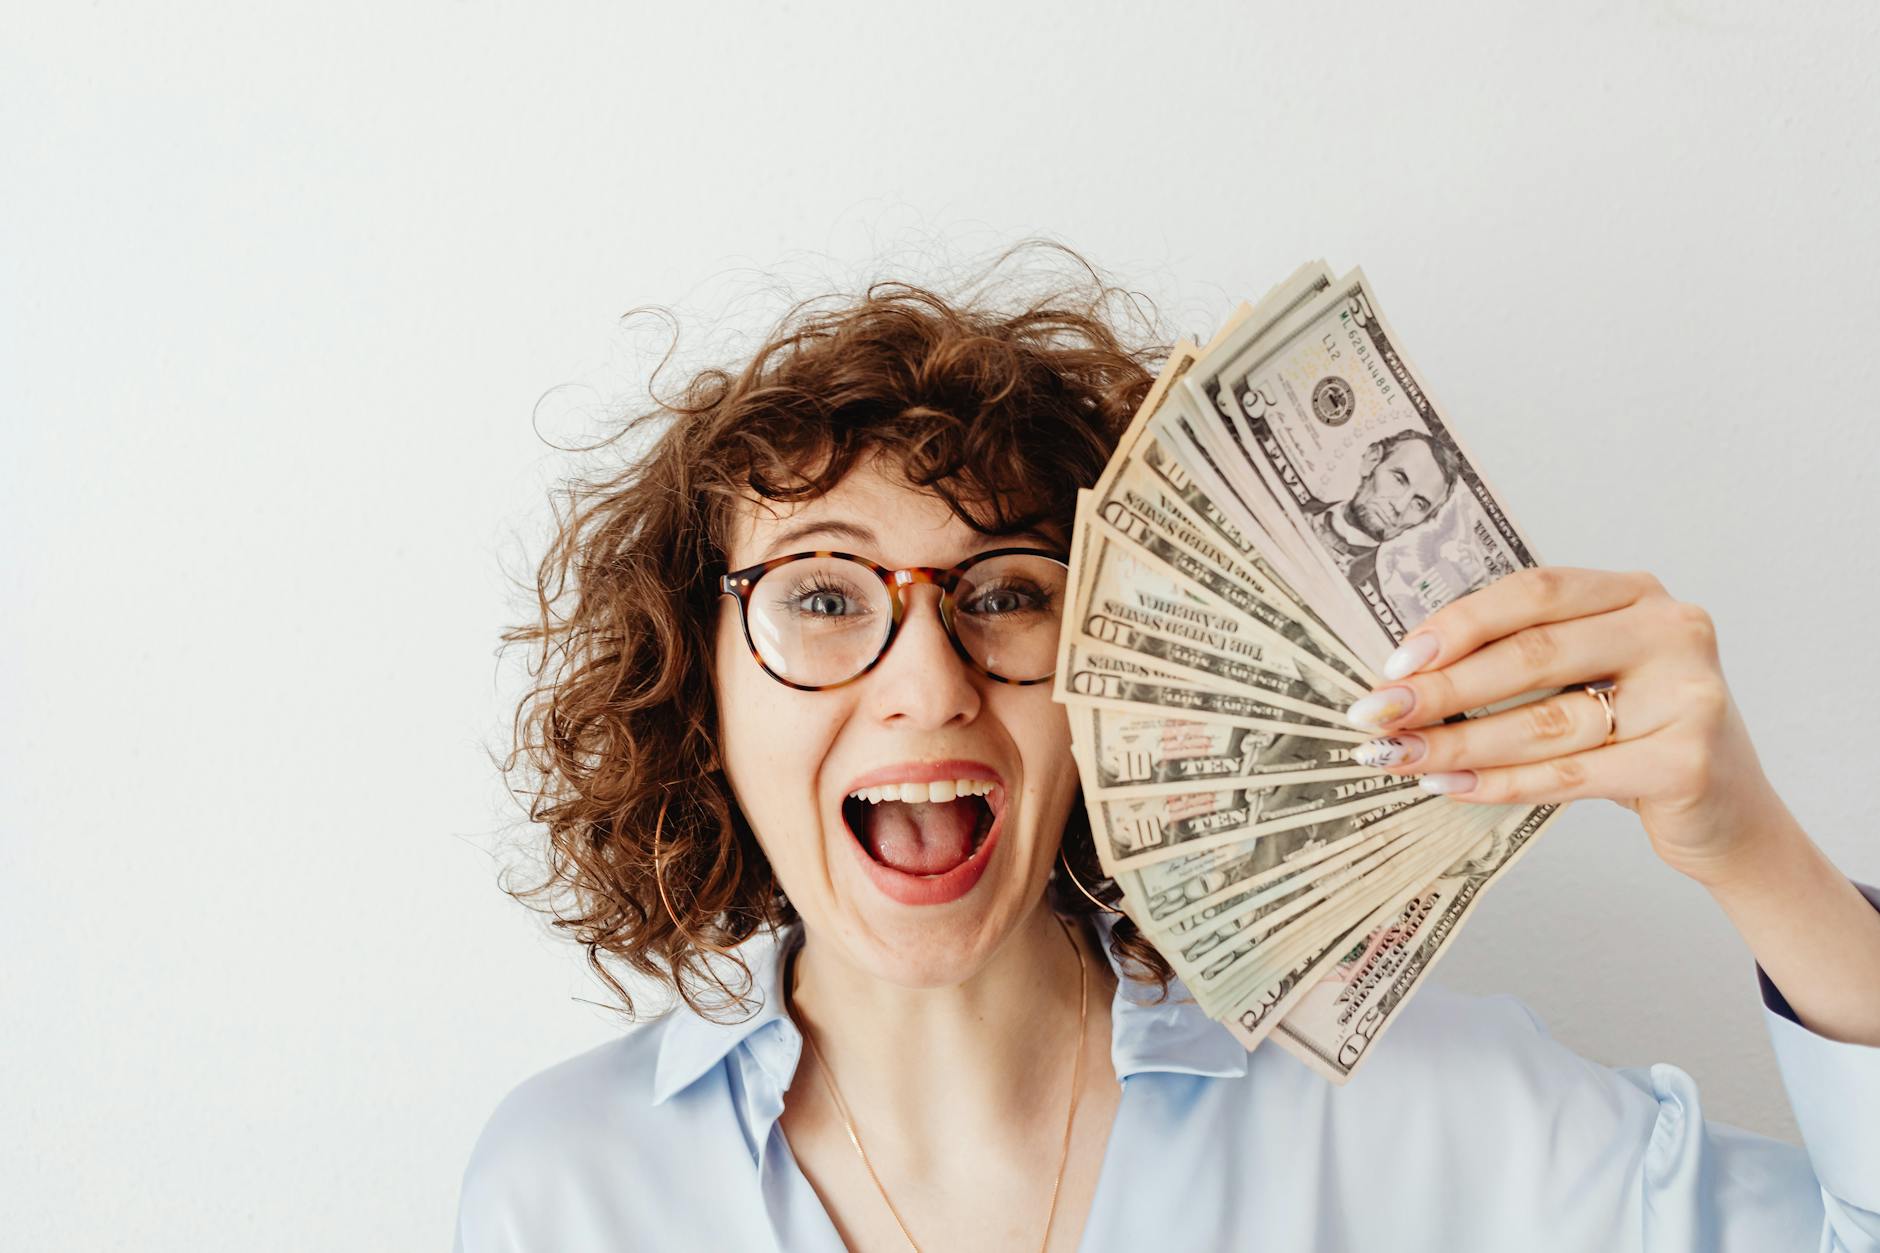 Mujer feliz en blusa azul de manga larga sosteniendo dinero